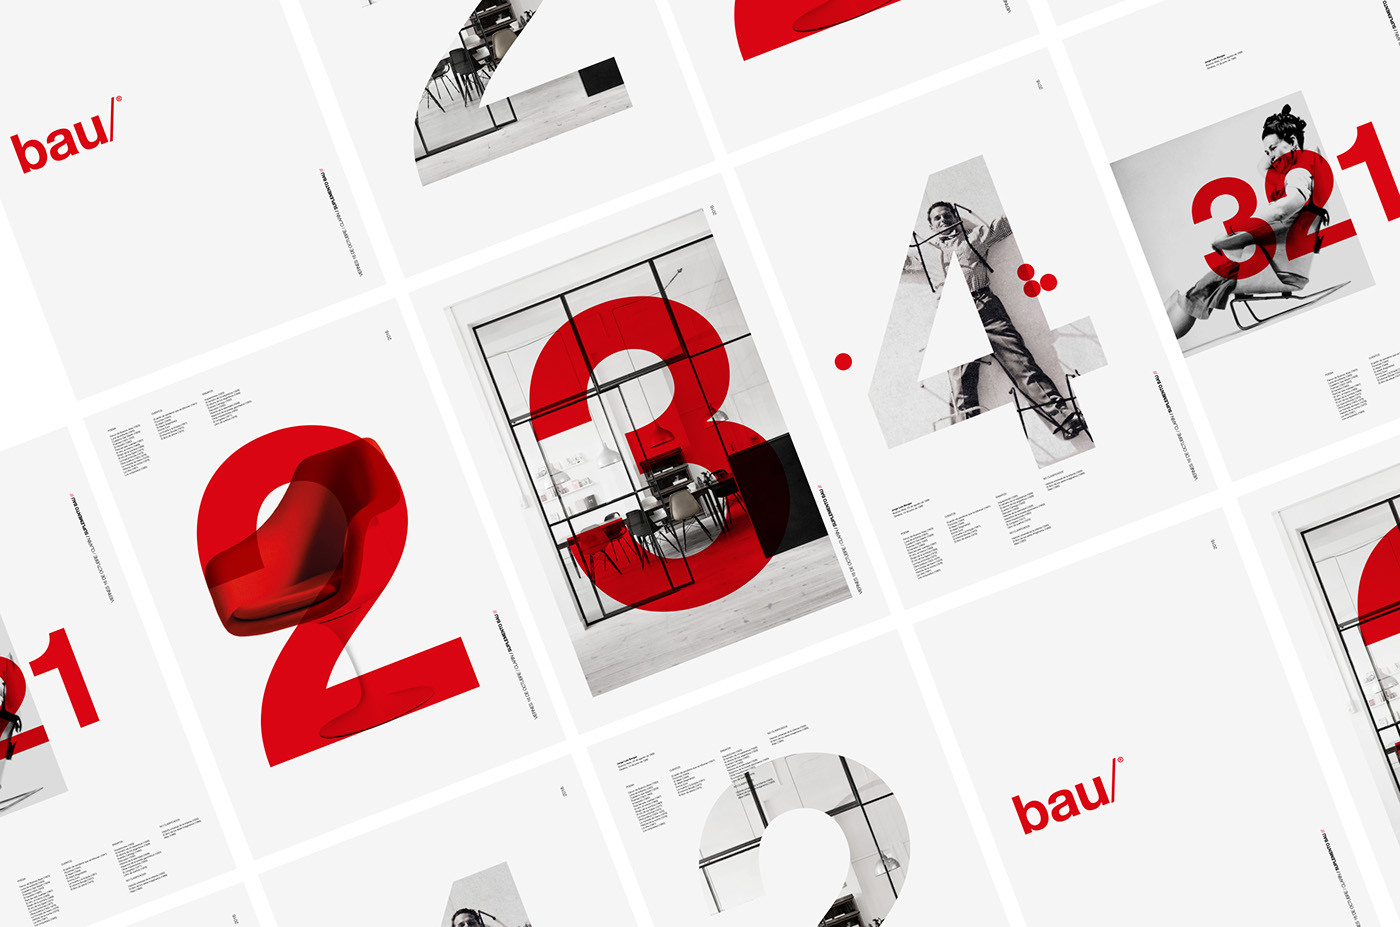 bau magazine helvetica modernism editorial Suplemento swiss minimalist EAMES typography  